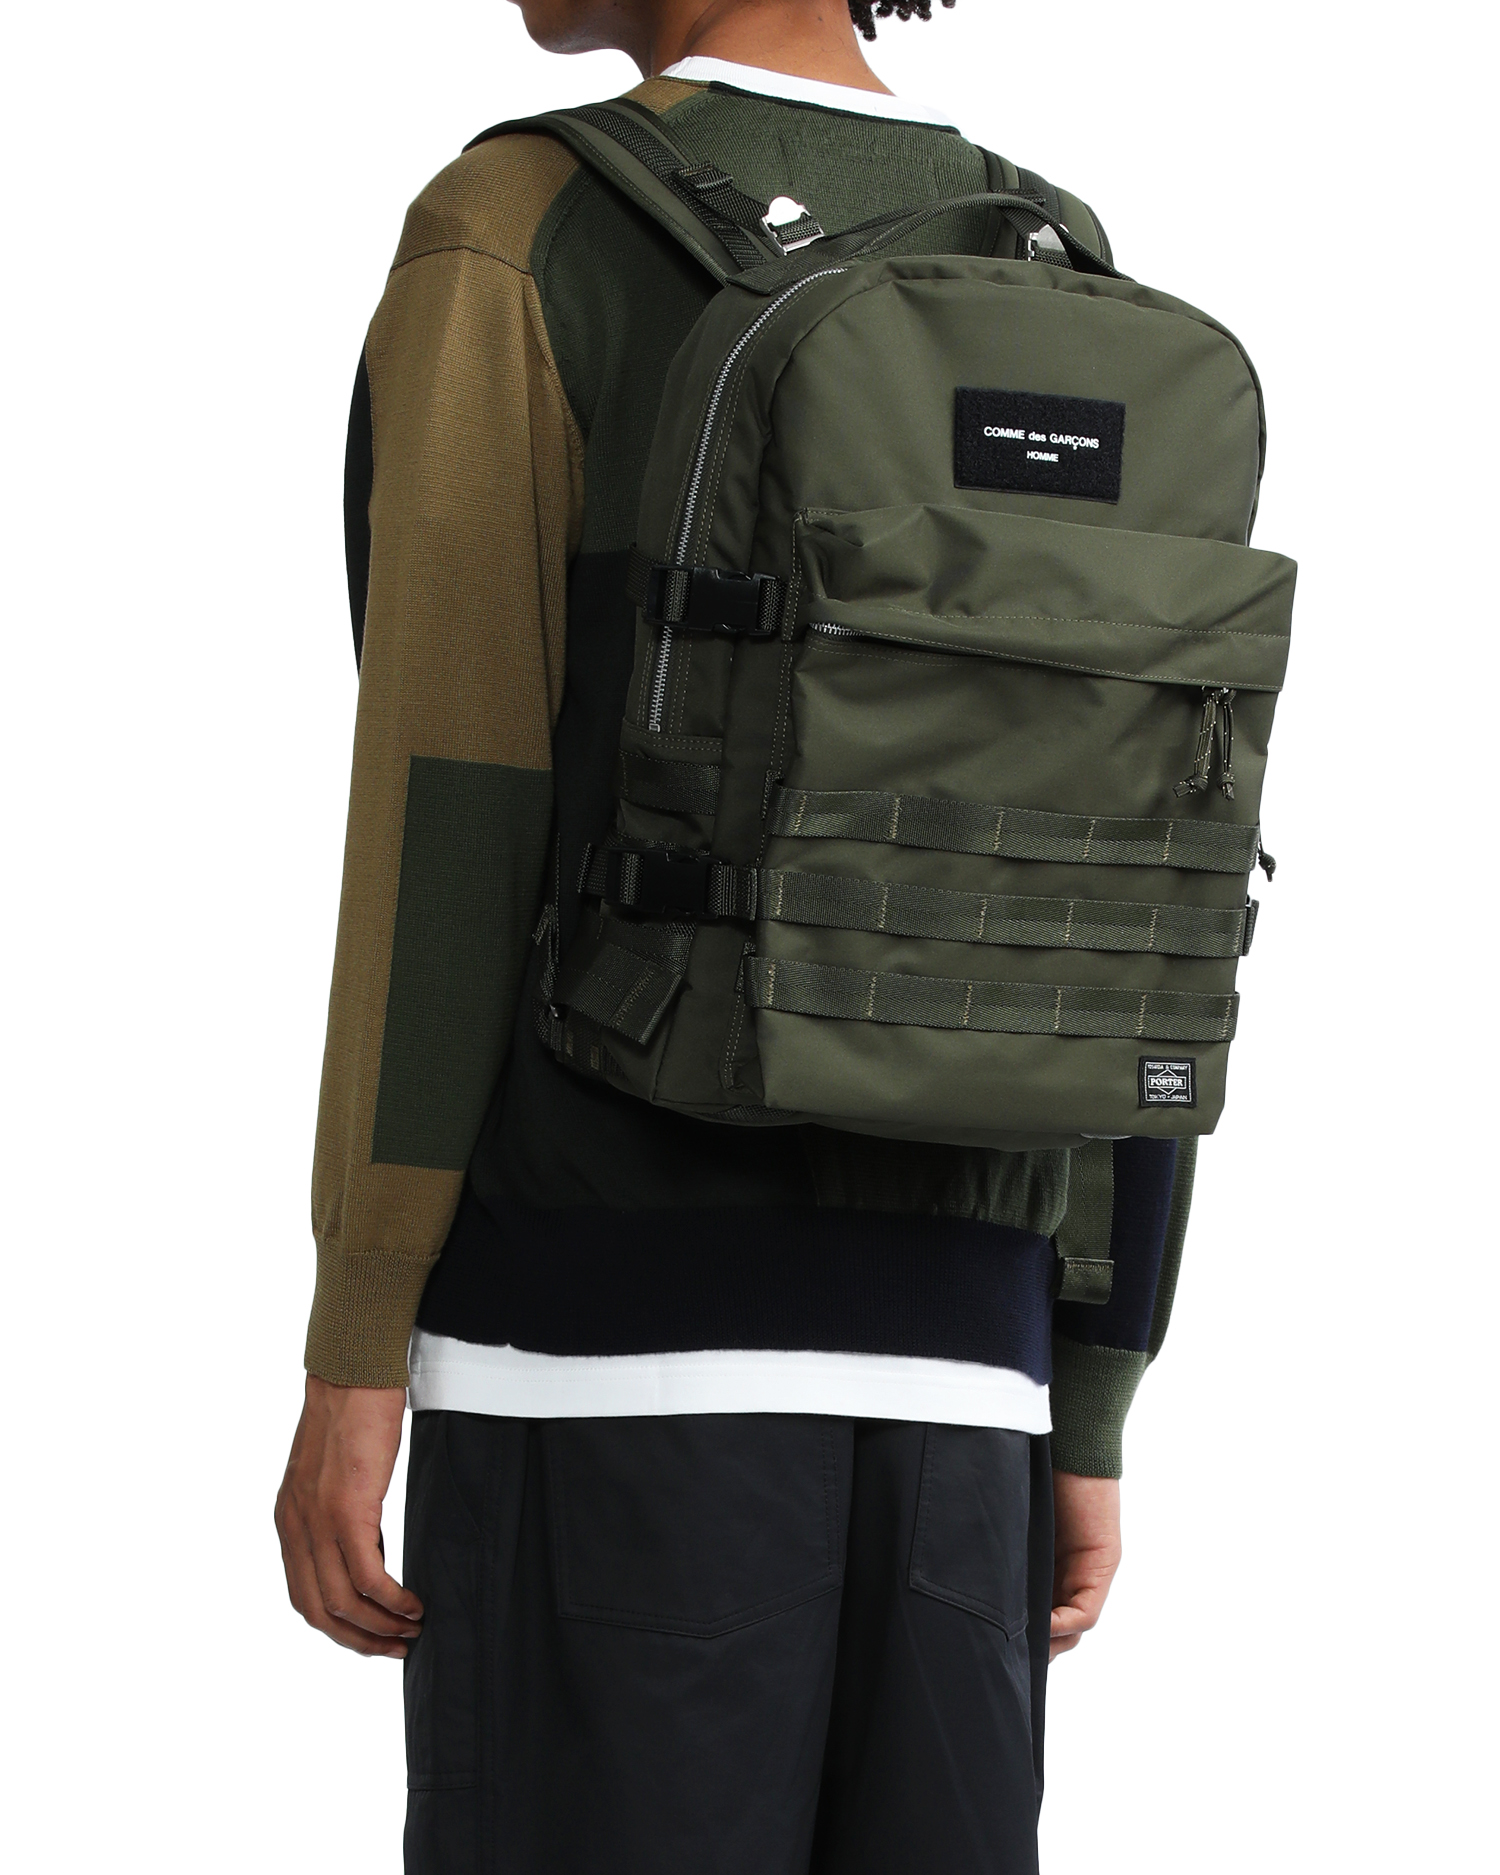 X Porter backpack